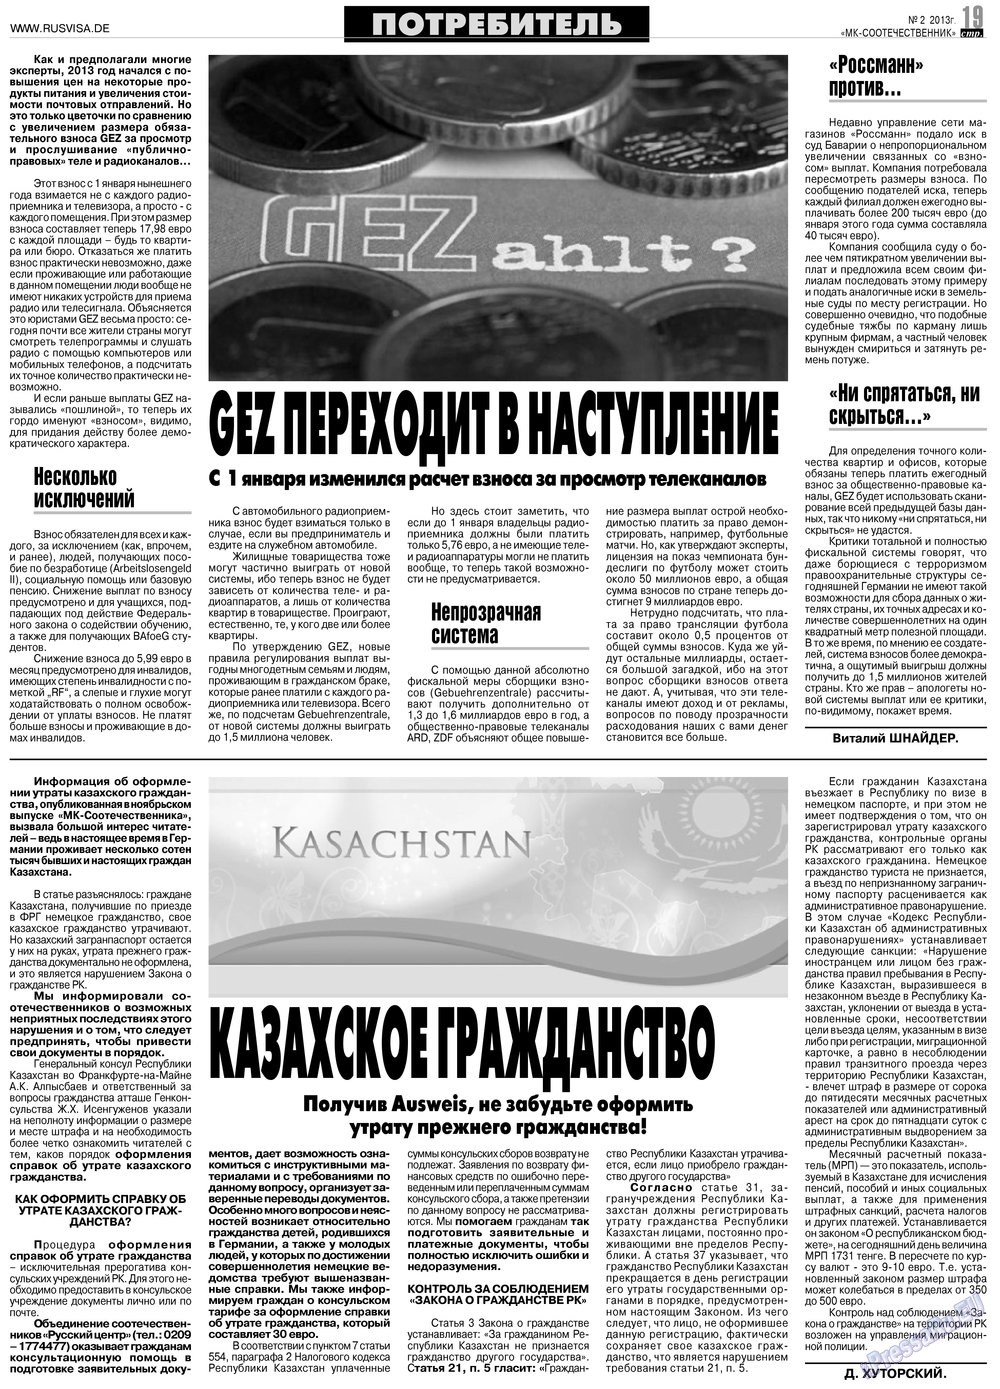 МК-Германия планета мнений, газета. 2013 №2 стр.19